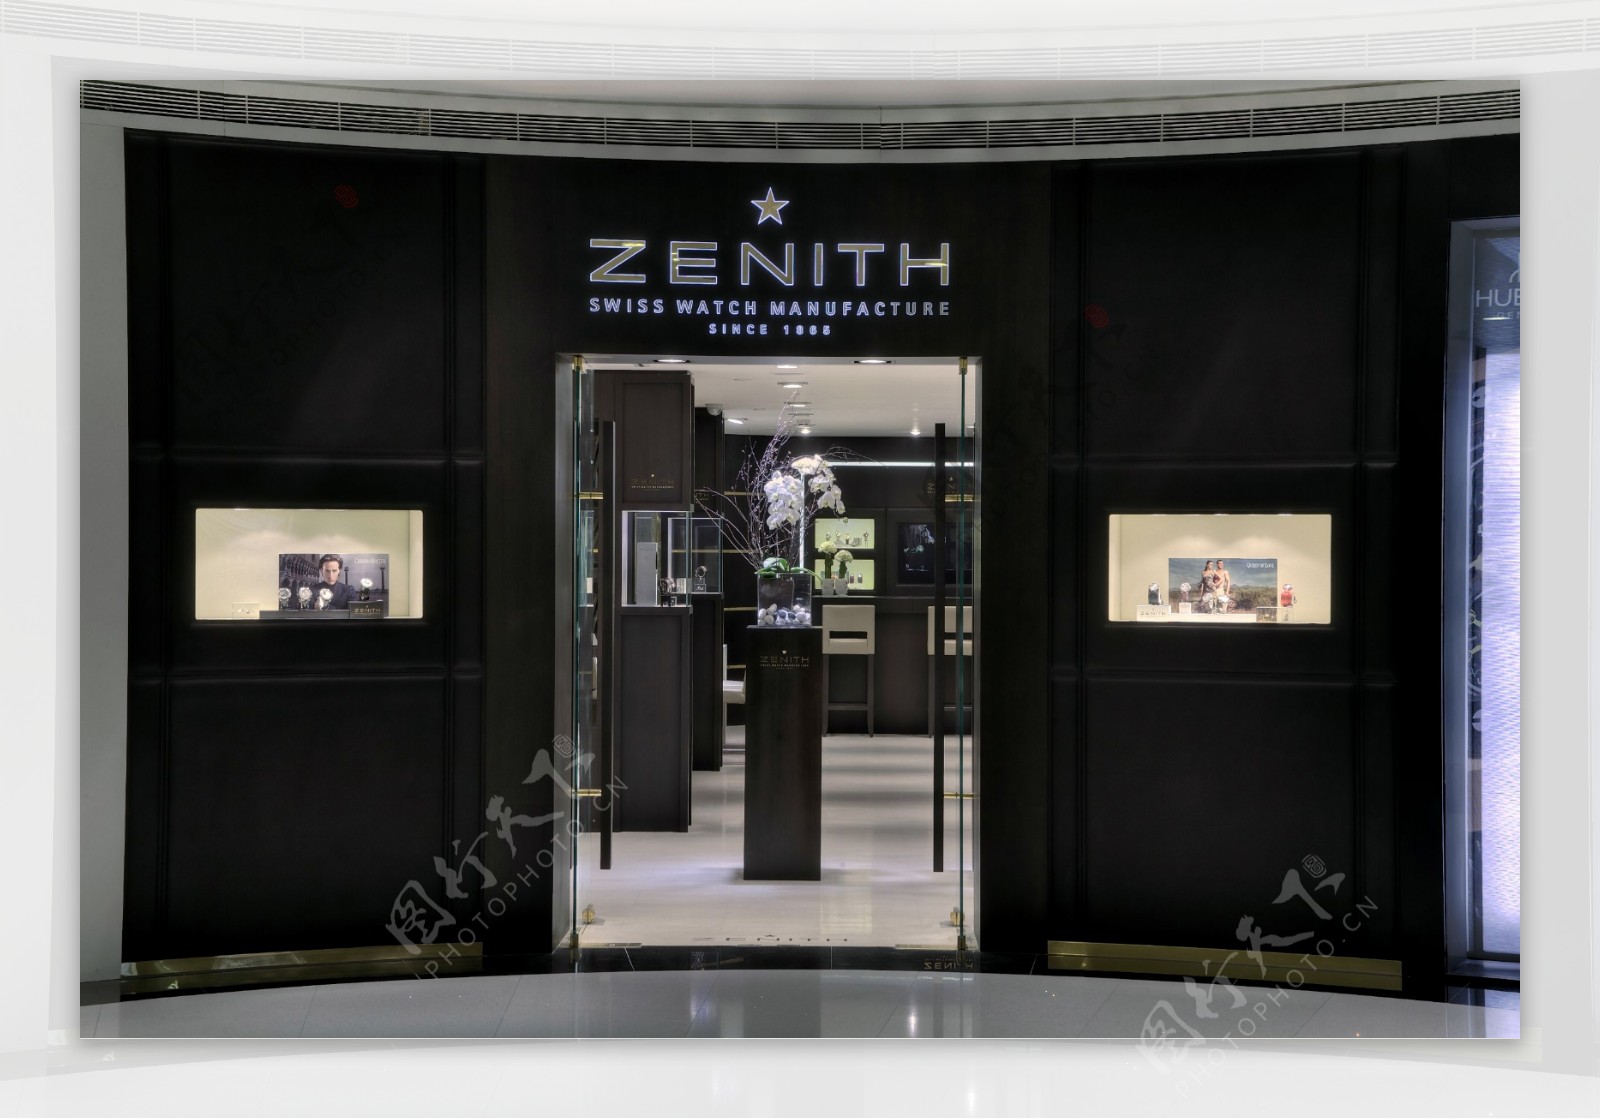 zenith真利时手表店图片